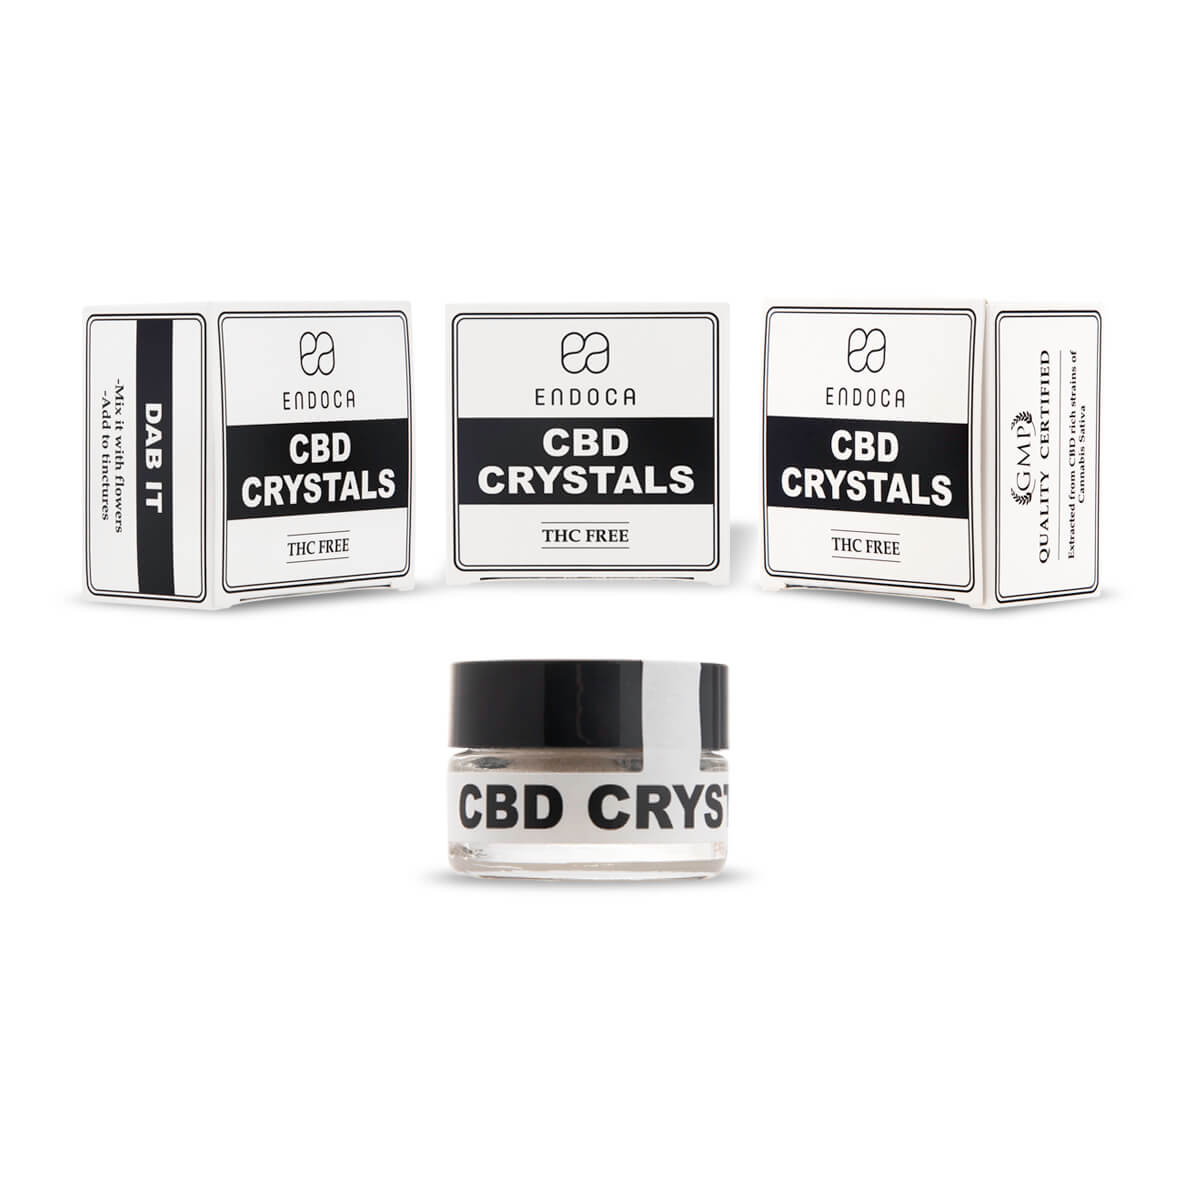 Endoca, CBD Crystal 99% Pure, 1g, 1000mg 1